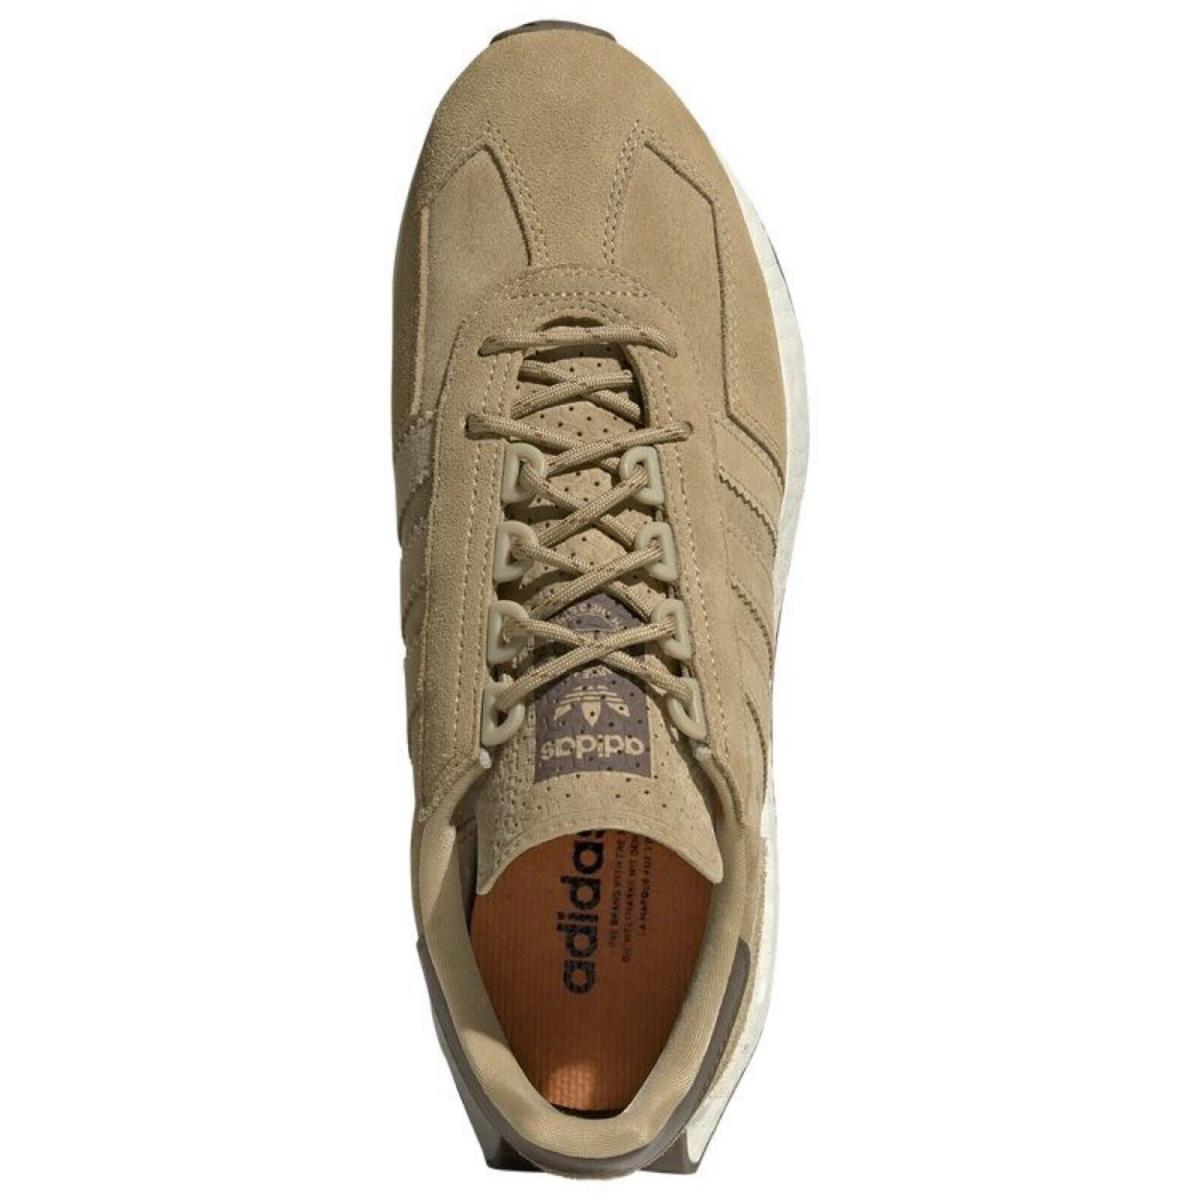 Adidas shoes Originals - Brown , Cardboard/Aluminum Manufacturer 3